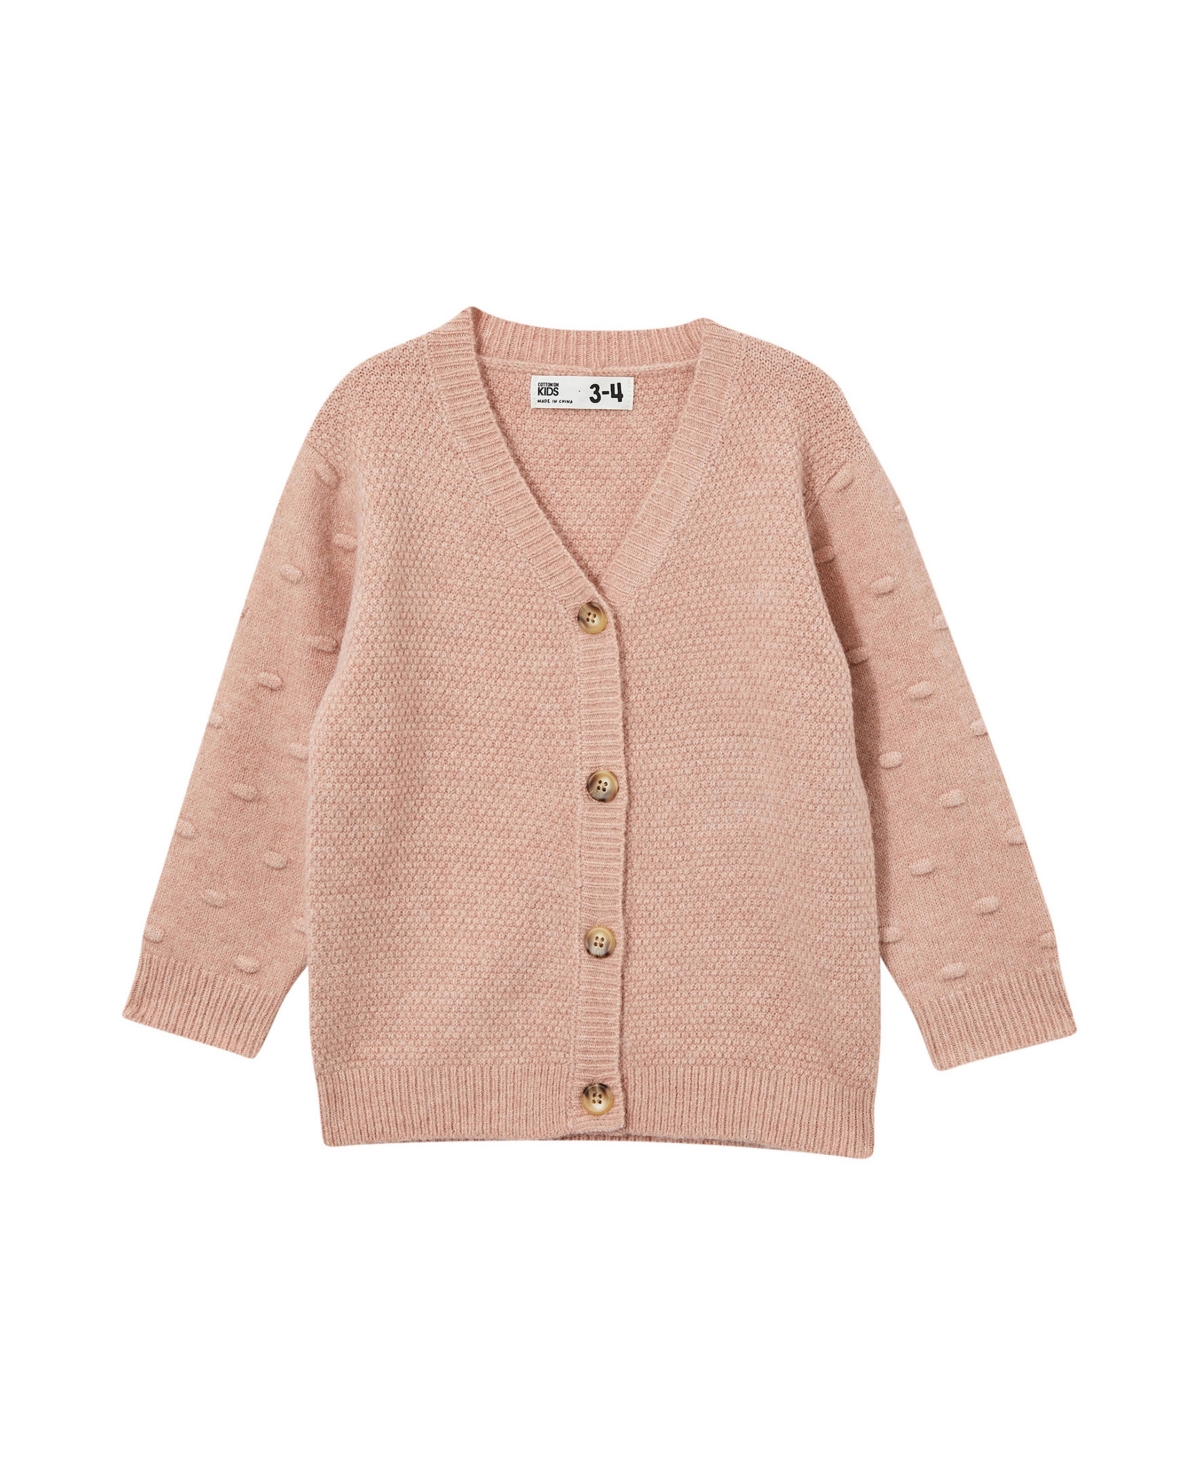 Cotton On Kids' Big Girls Suzie Cardigan Sweater In Zephyr Marle